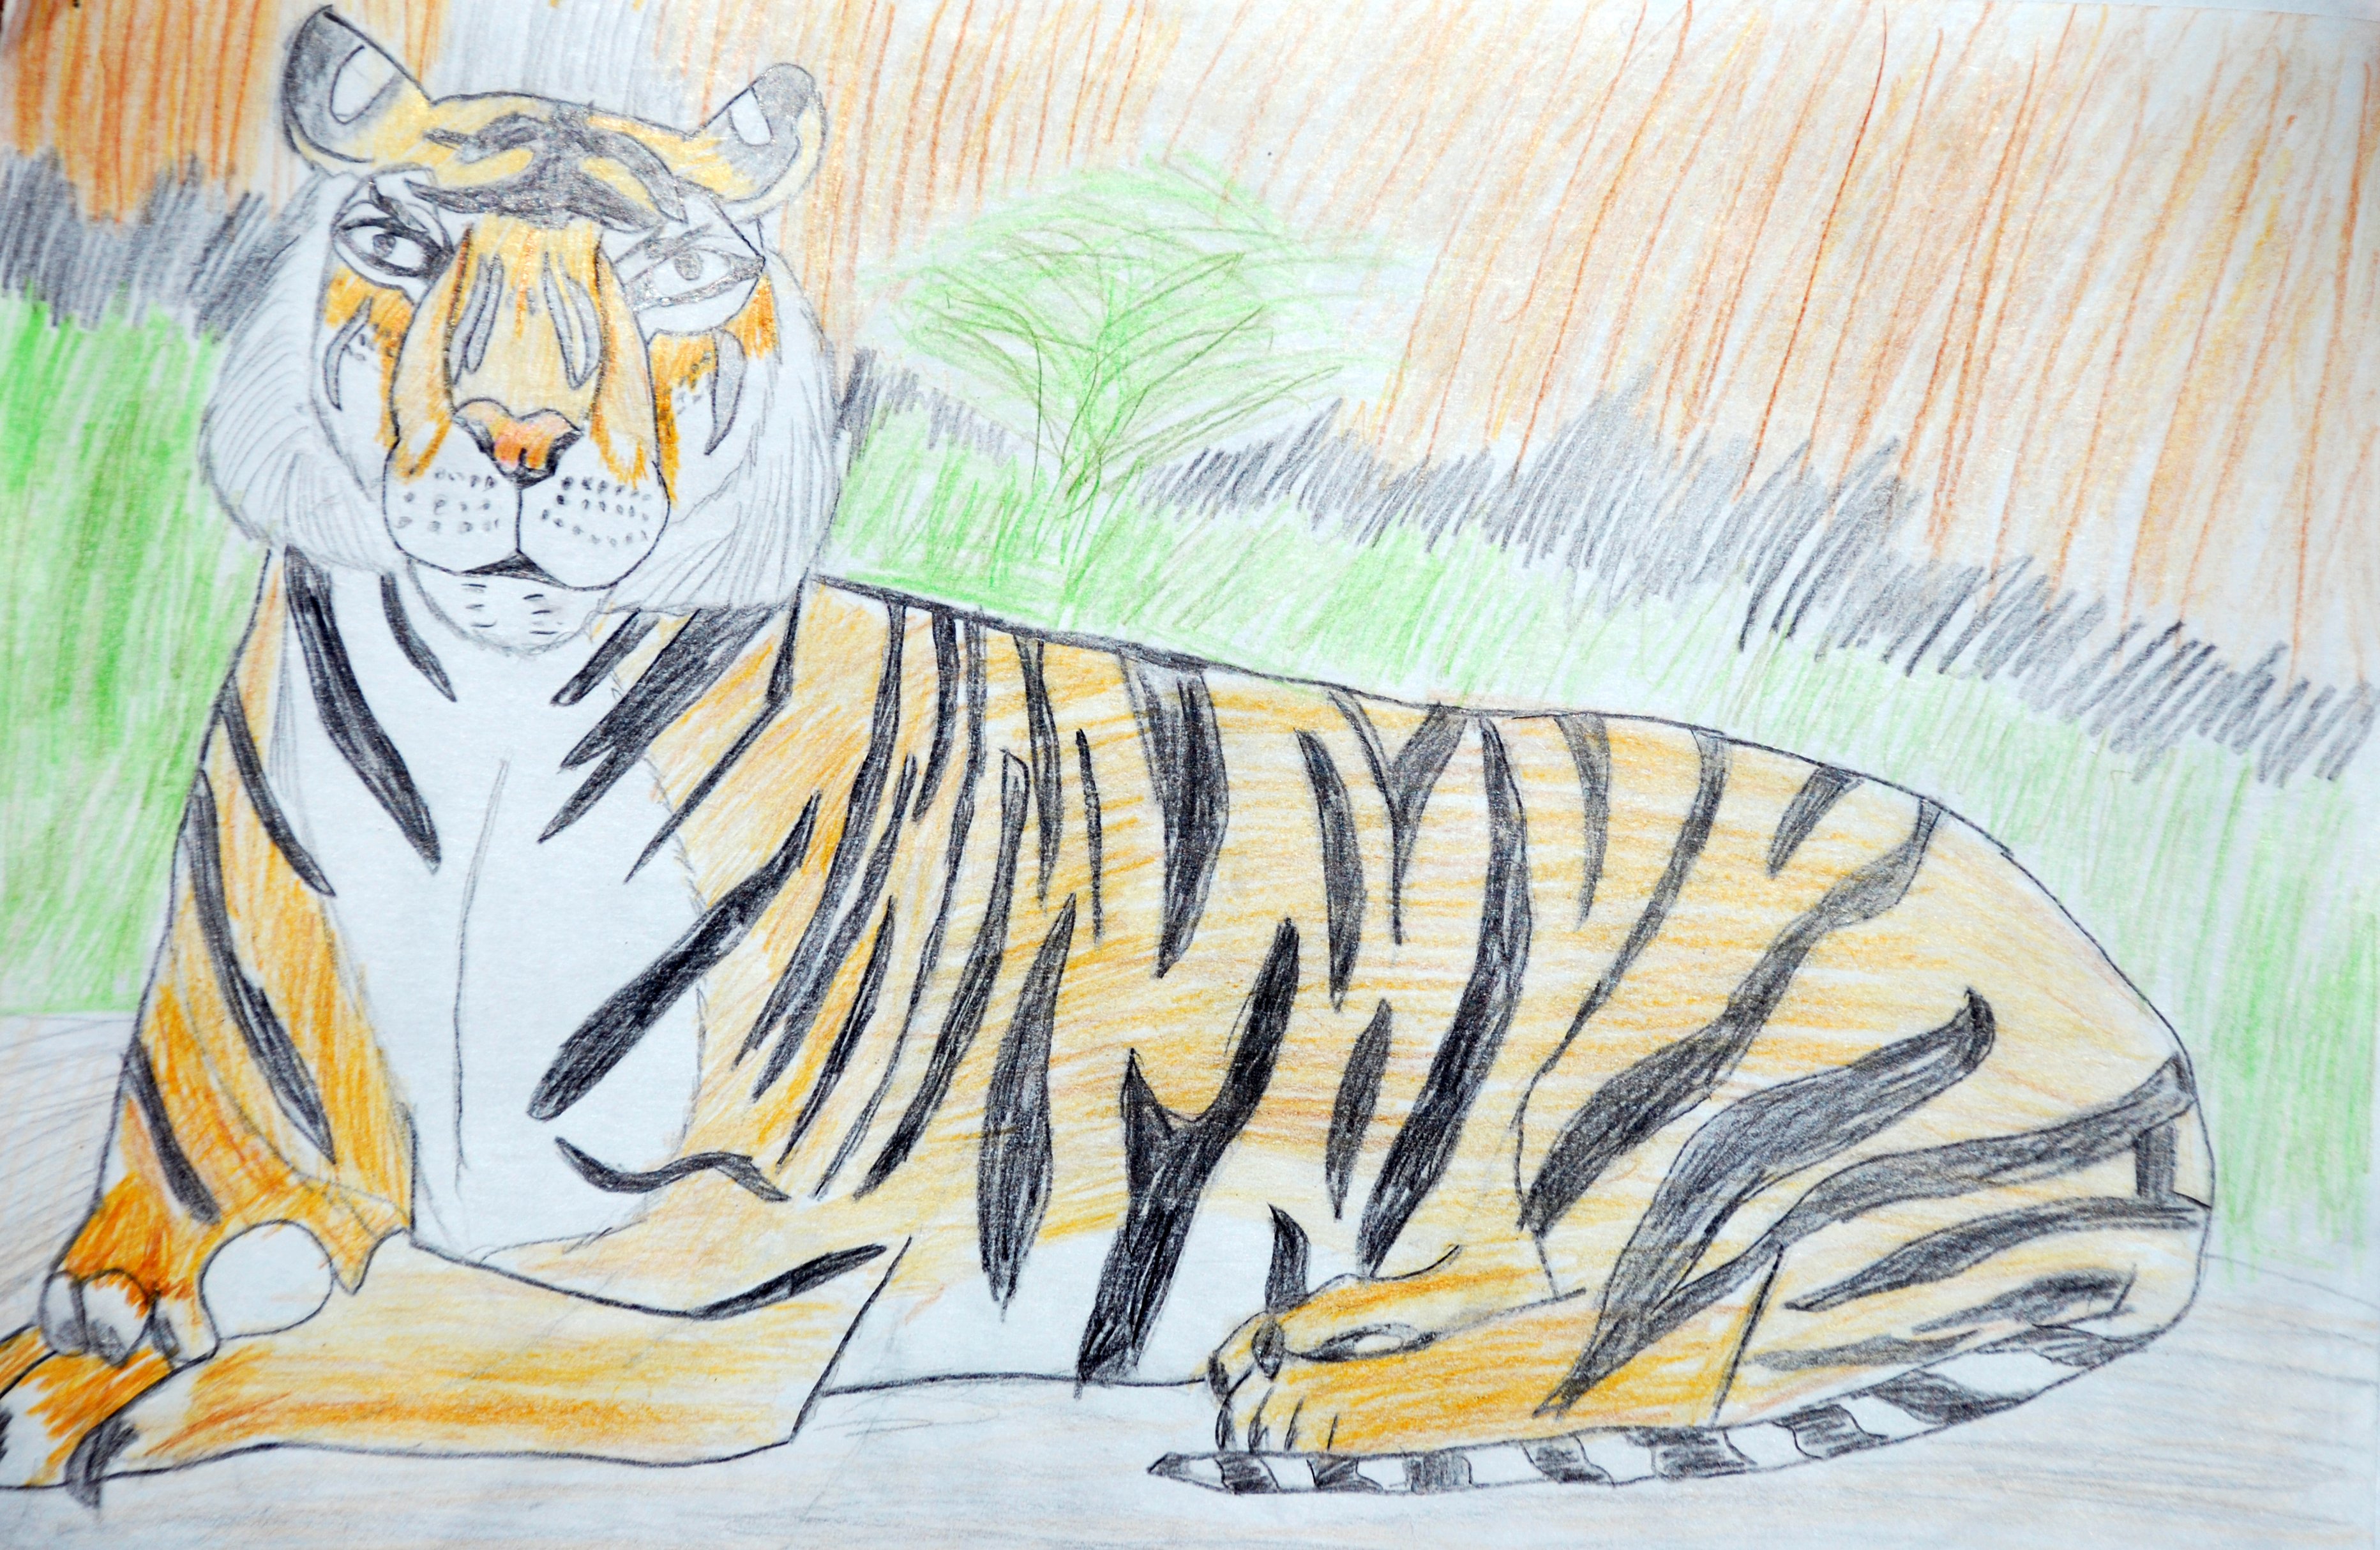 Уссурийский тигр карандашом